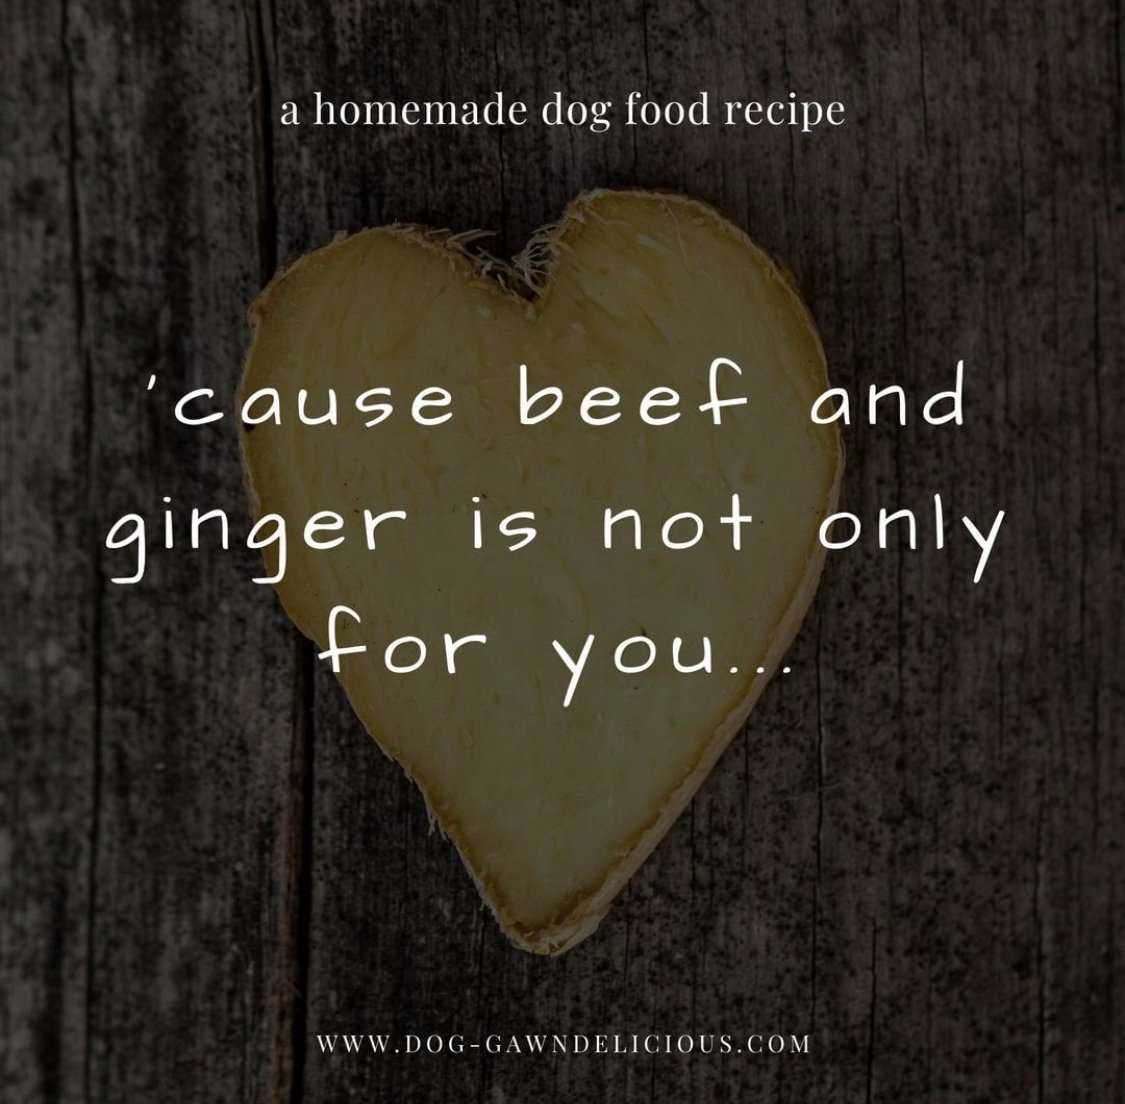 An easy balanced homemade dog food recipe dog-gawndelicious.com
#healthyhomemade #dogfoodrecipes #freedogfoodrecipes